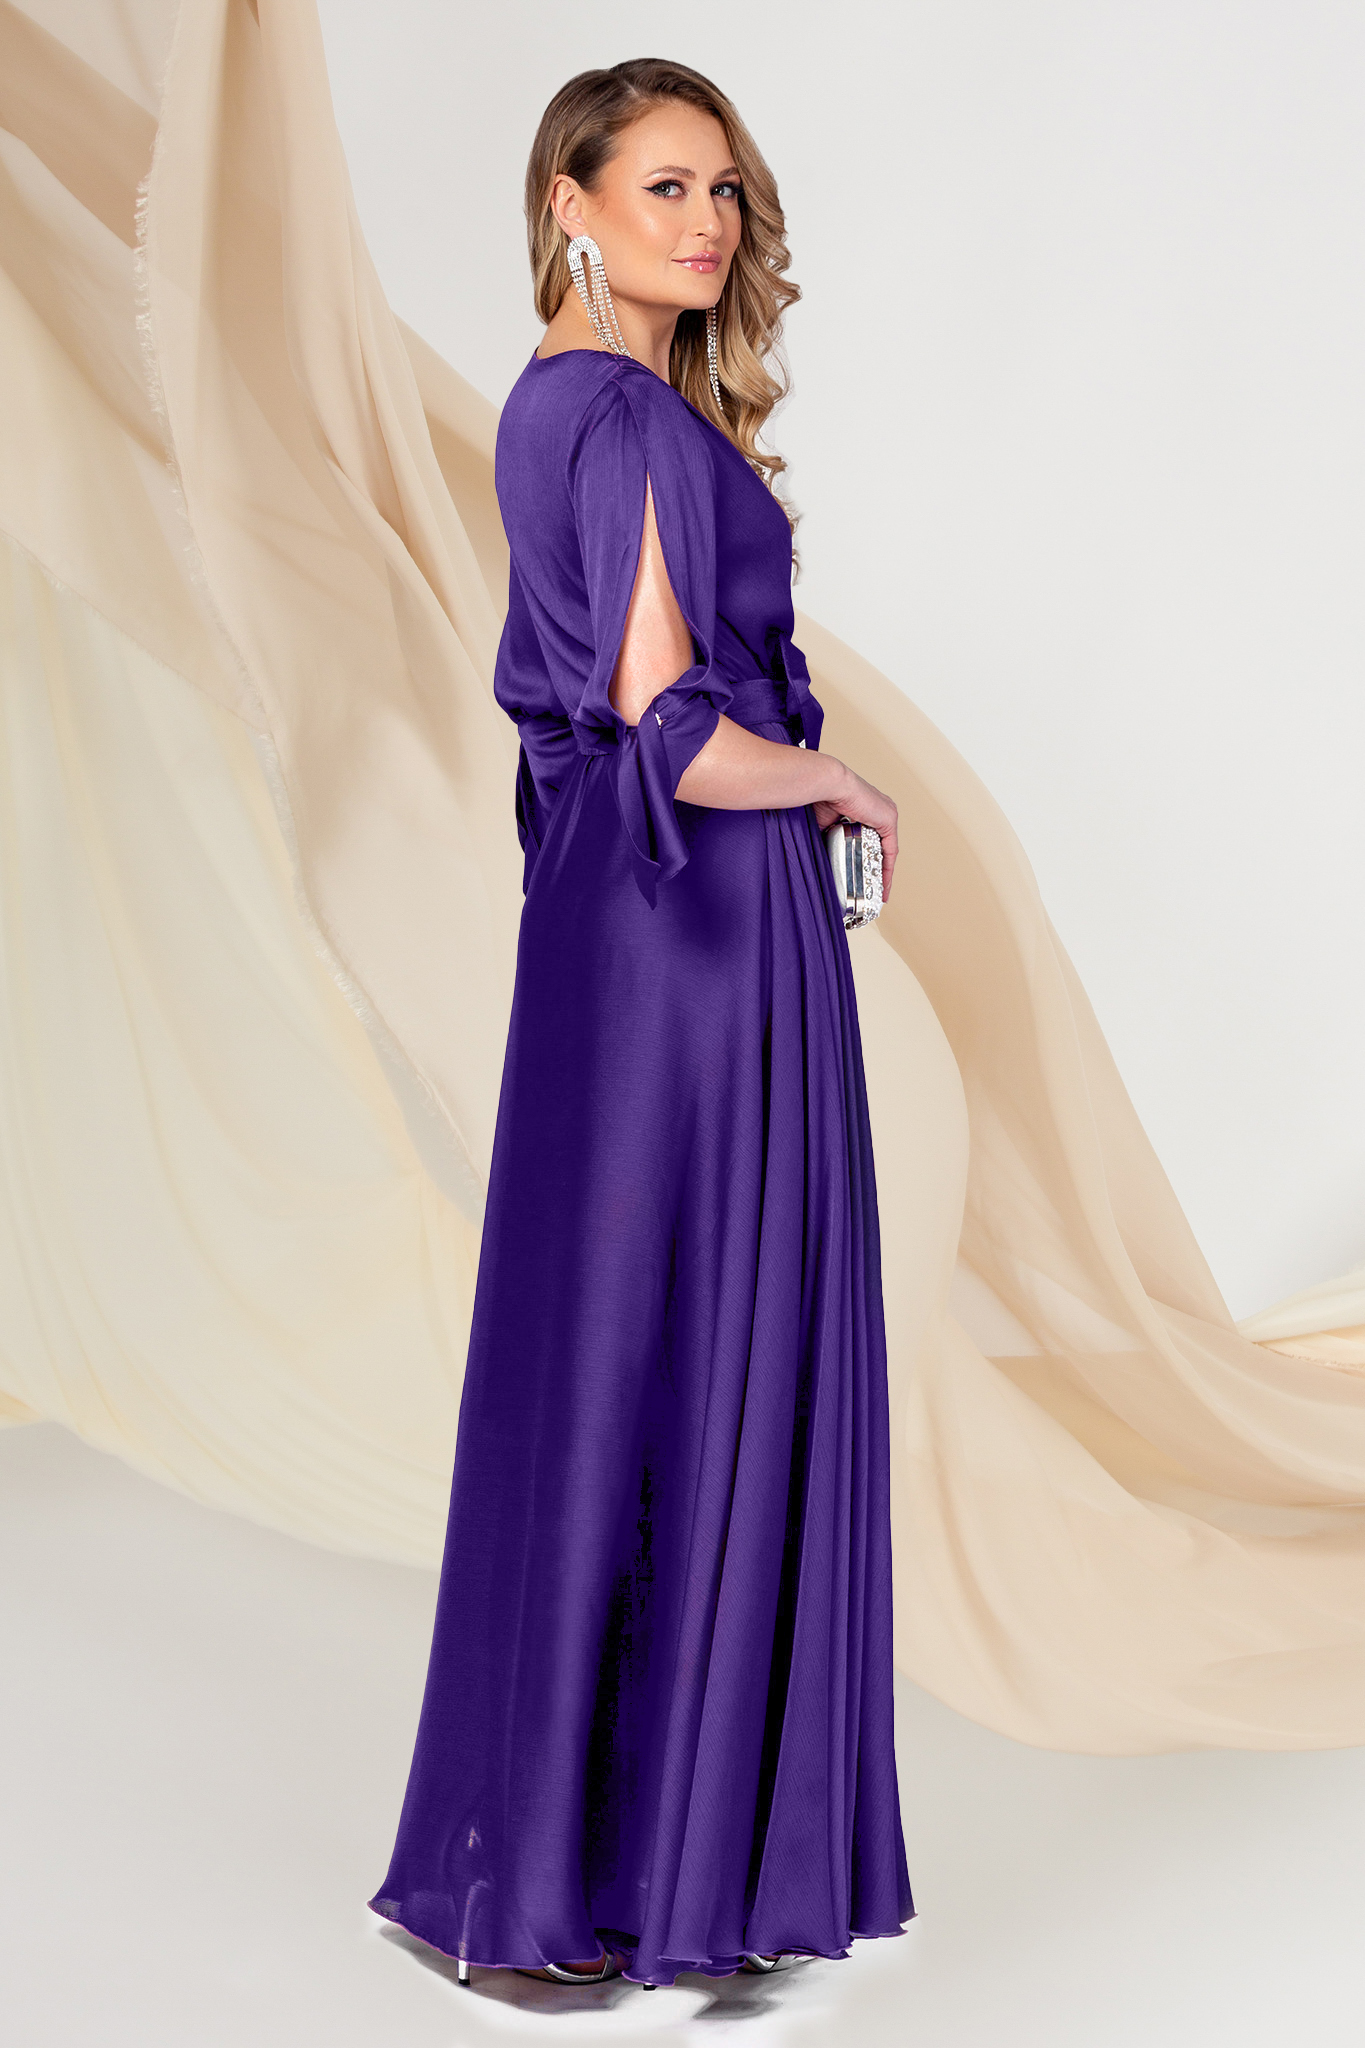 Dark Purple Chiffon Dress Wrapped in Clos with Elastic Waist - PrettyGirl 2 - StarShinerS.com